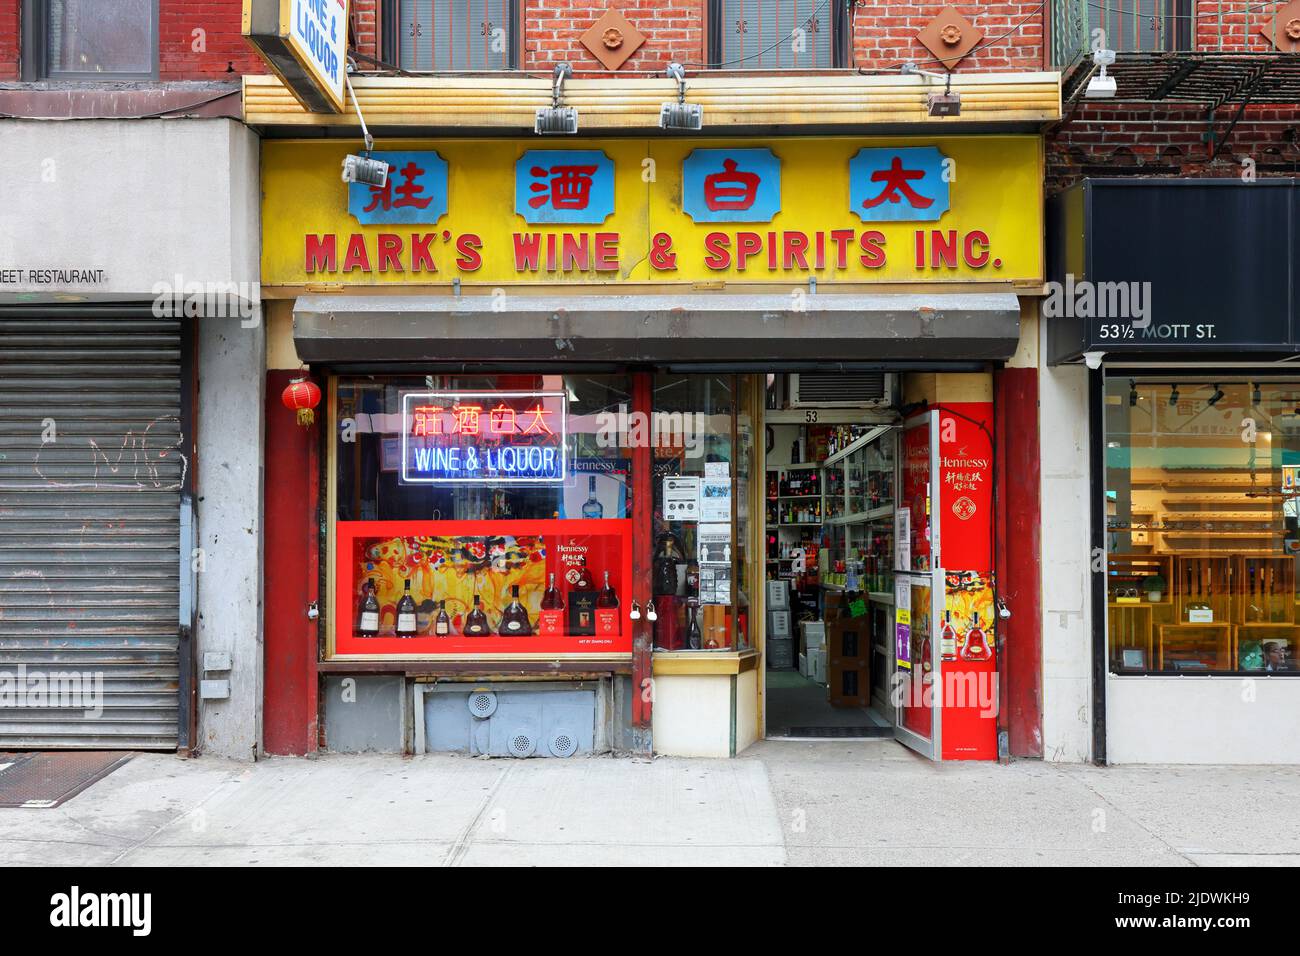 Mark's Wine & Spirits 太白酒莊, 53 Mott St, New York, NY. exterior storefront of a liquor store in Manhattan Chinatown. Stock Photo